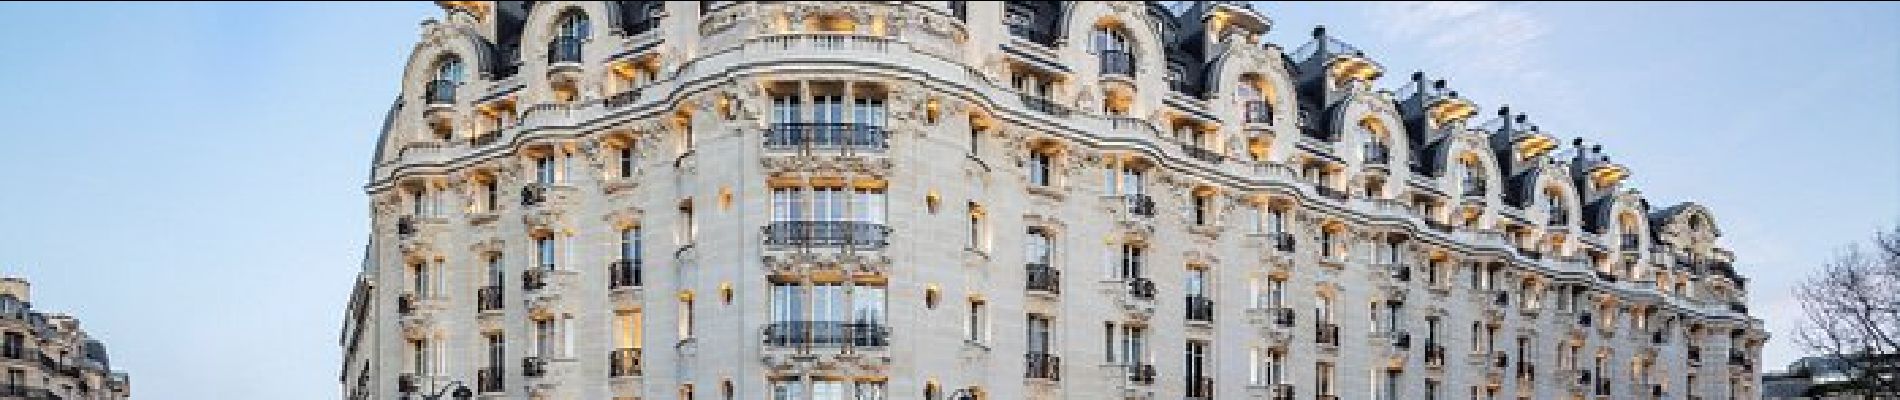 POI Paris - Hotel Lutecia - Photo